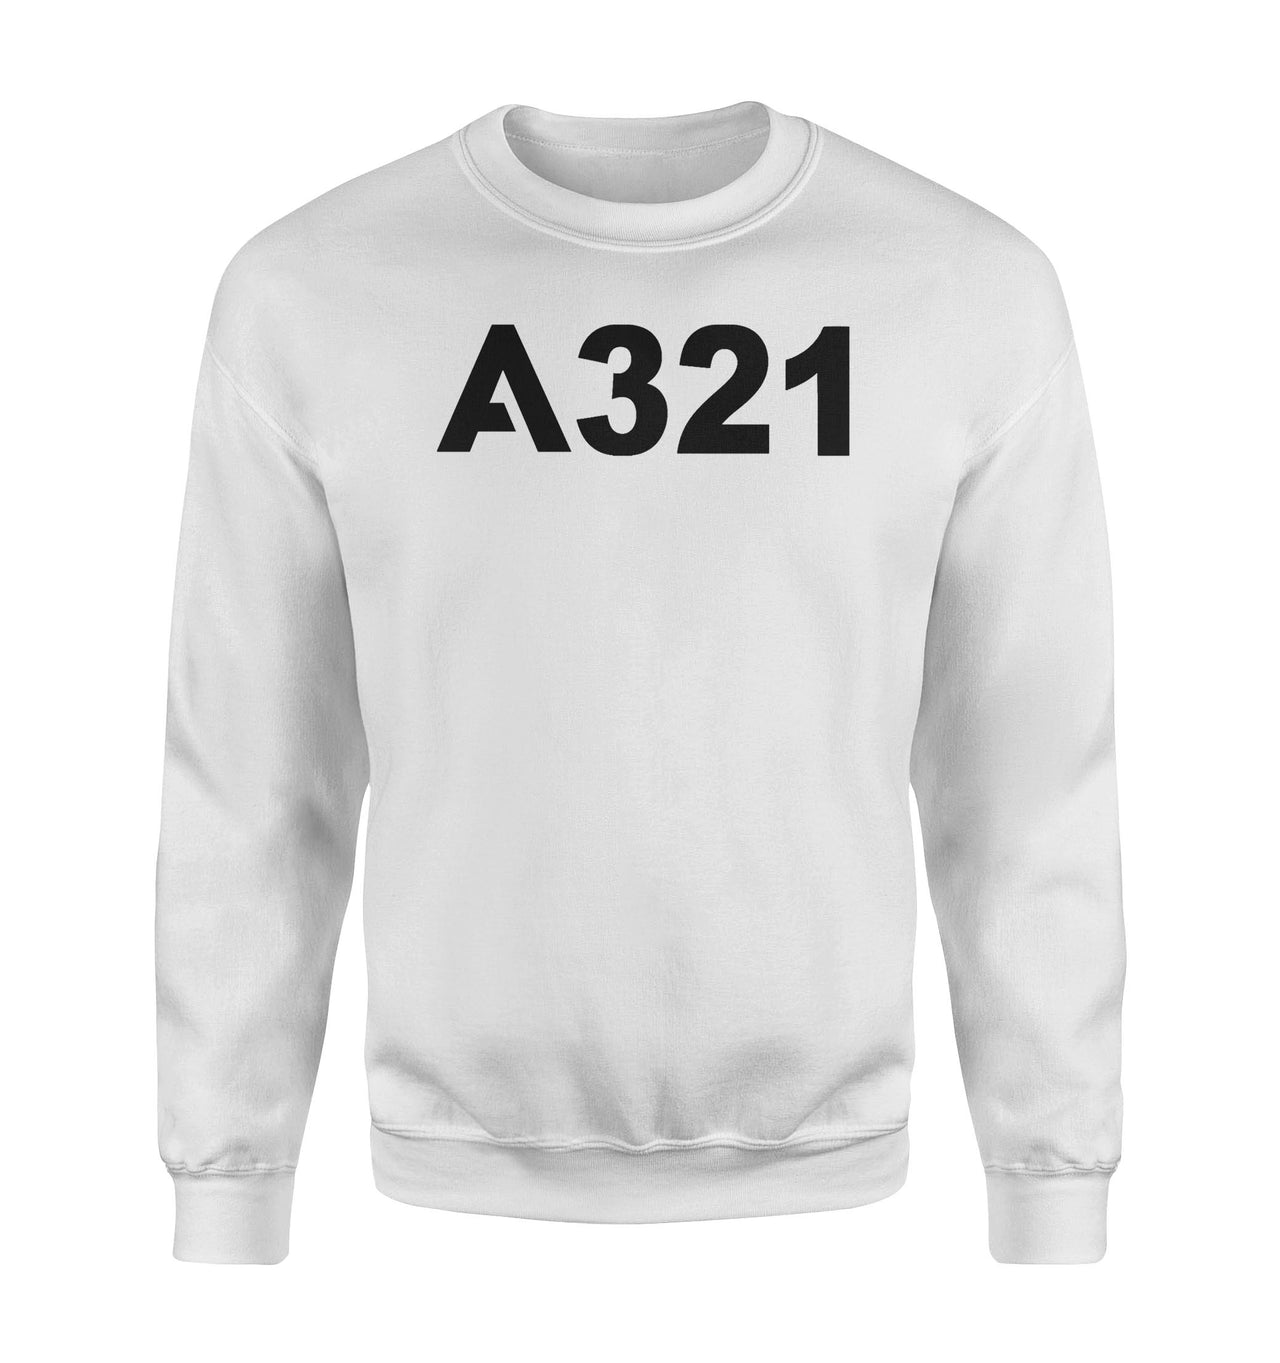 A321 Flat Text Designed Sweatshirts